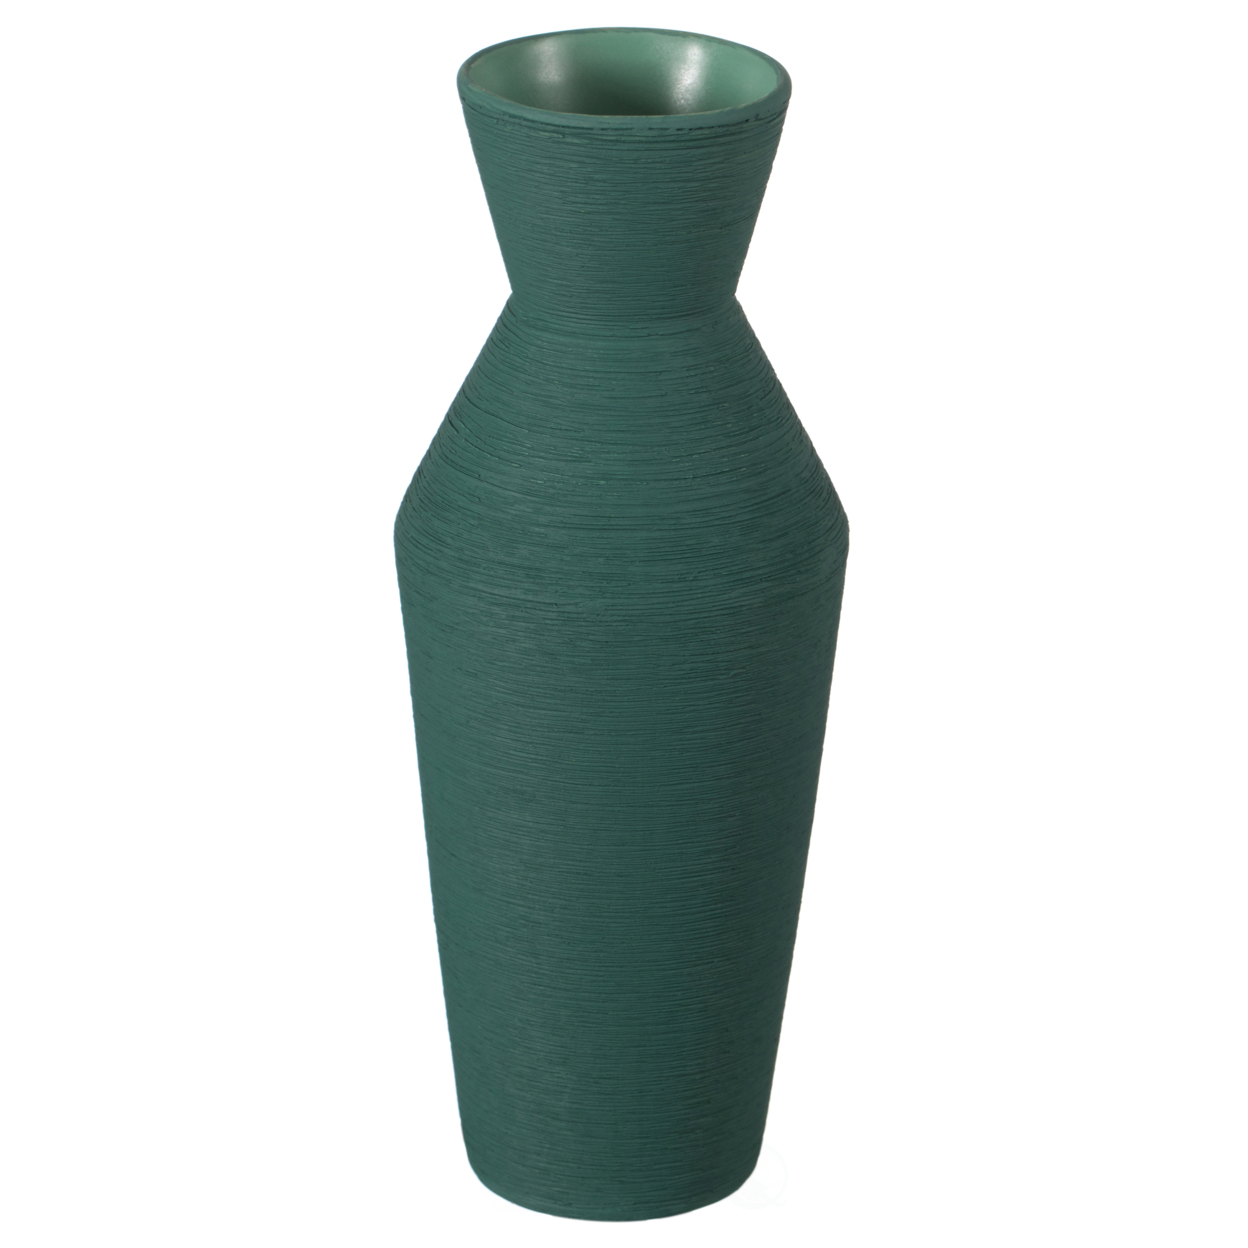 Decorative Ceramic Round Sharp Concaved Top Vase Centerpiece Table Vase - Green